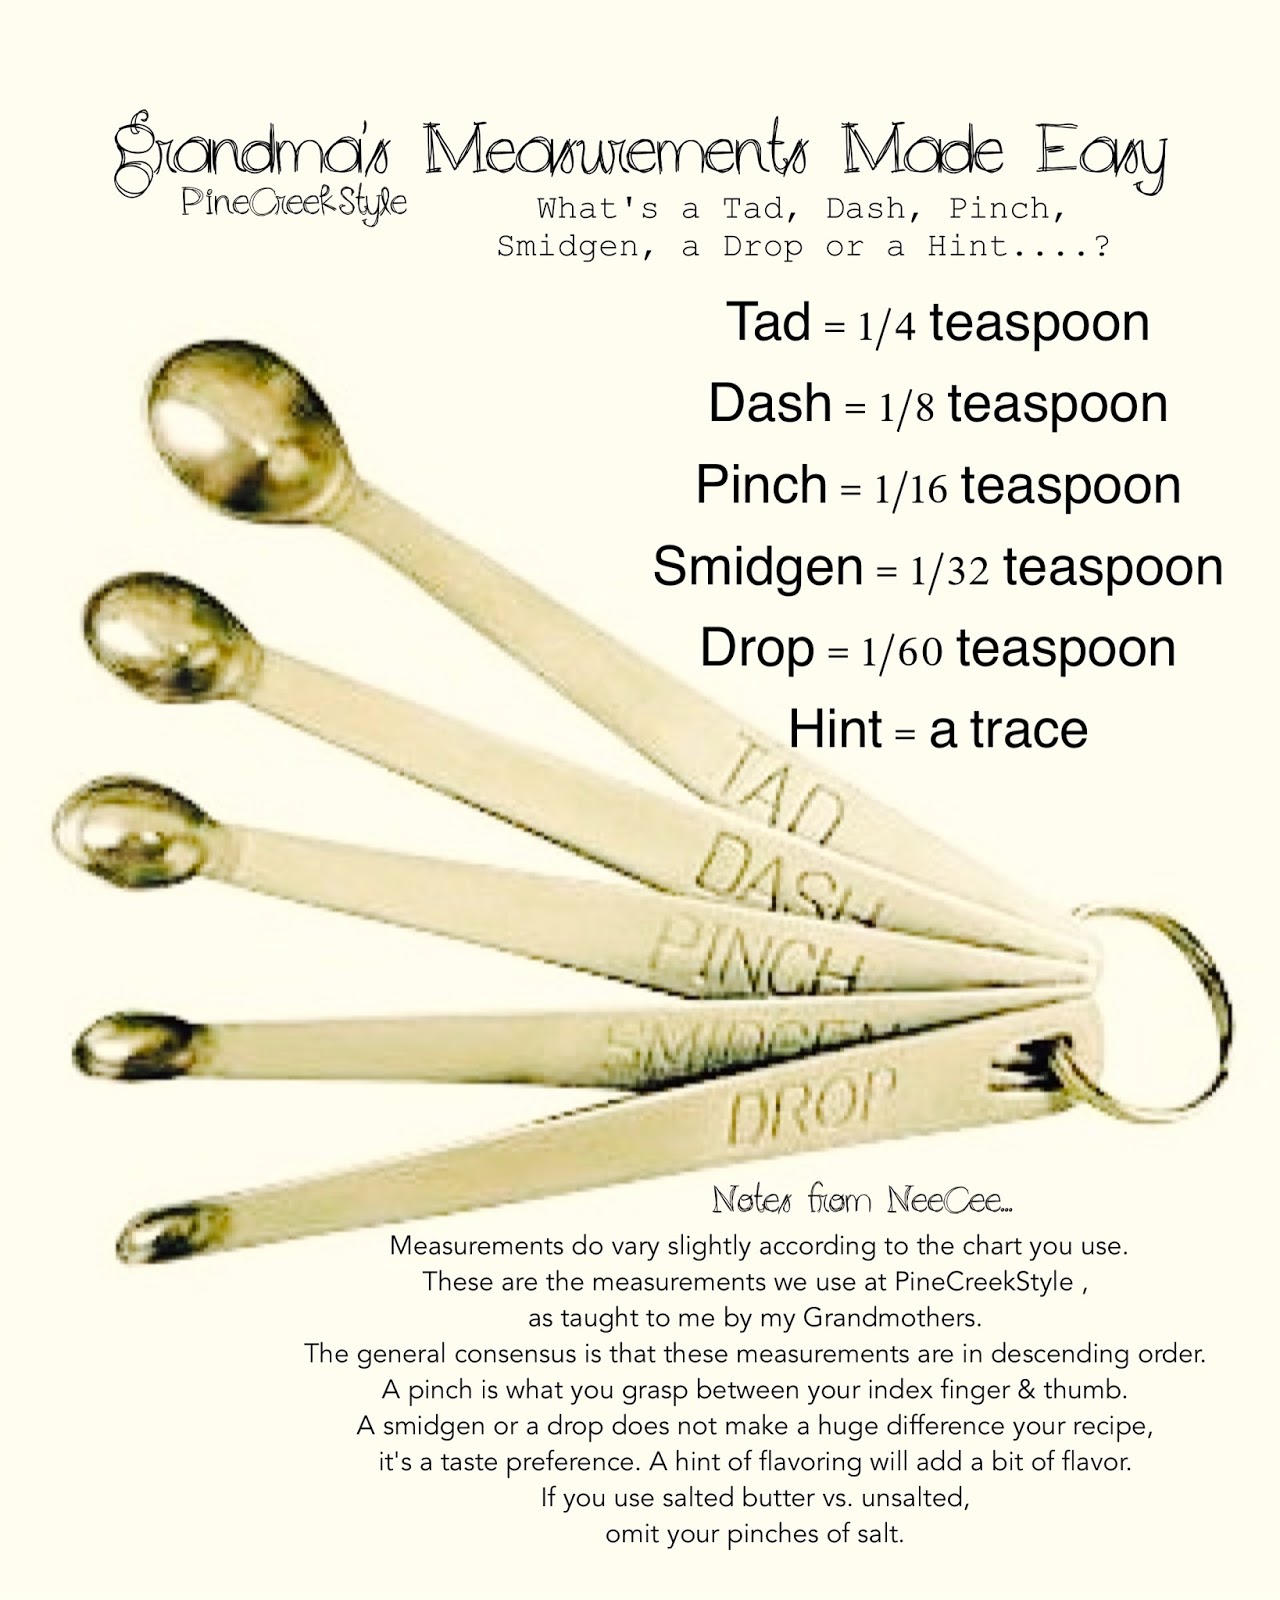 Measurements = Tad = 1/4 teaspoon Dash = 1/8 teaspoon Smidgen = 1